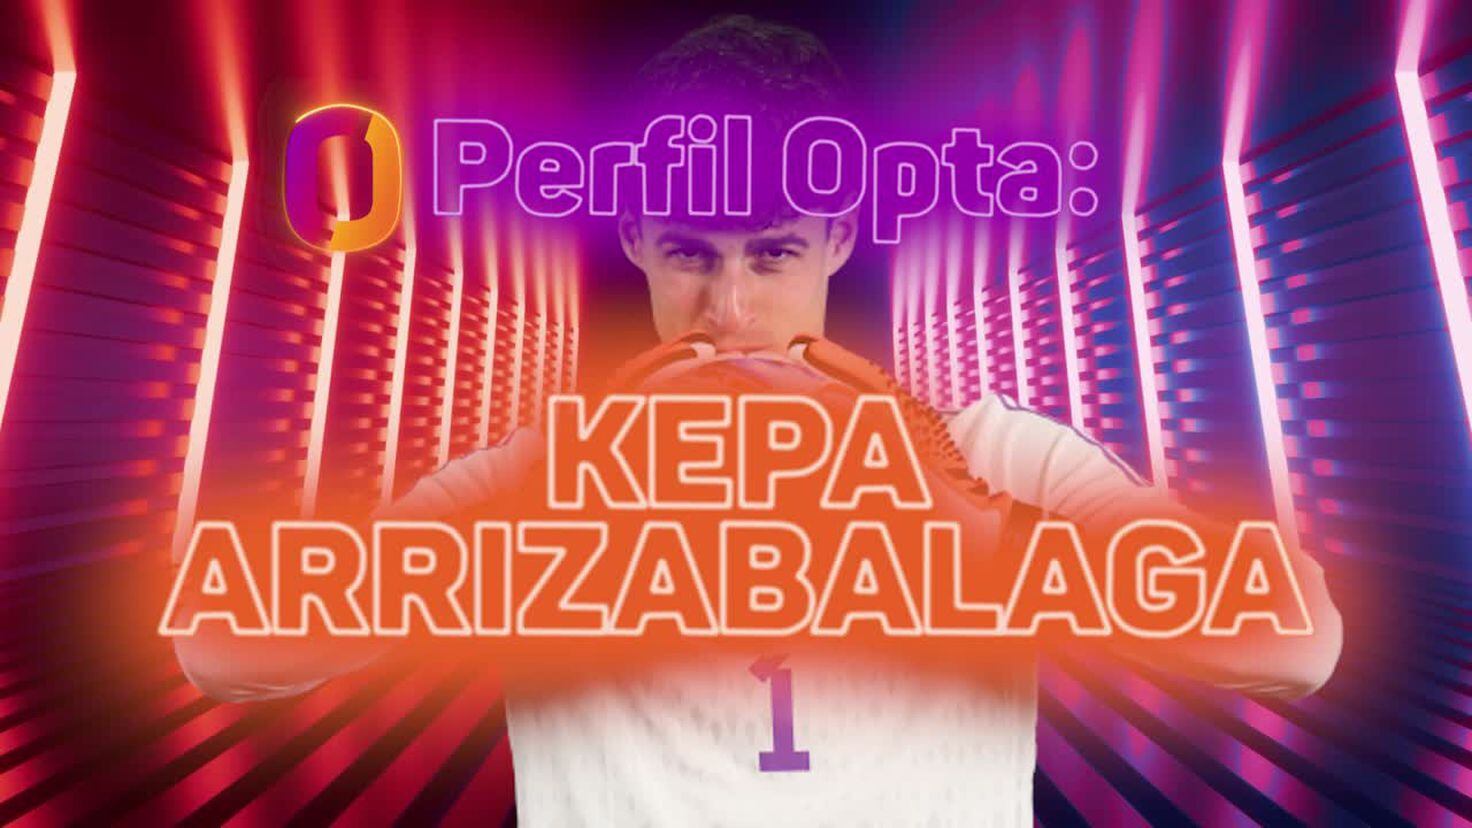 Real Madrid - Kepa Arrizabalaga ya es nuevo portero del Madrid - oficial